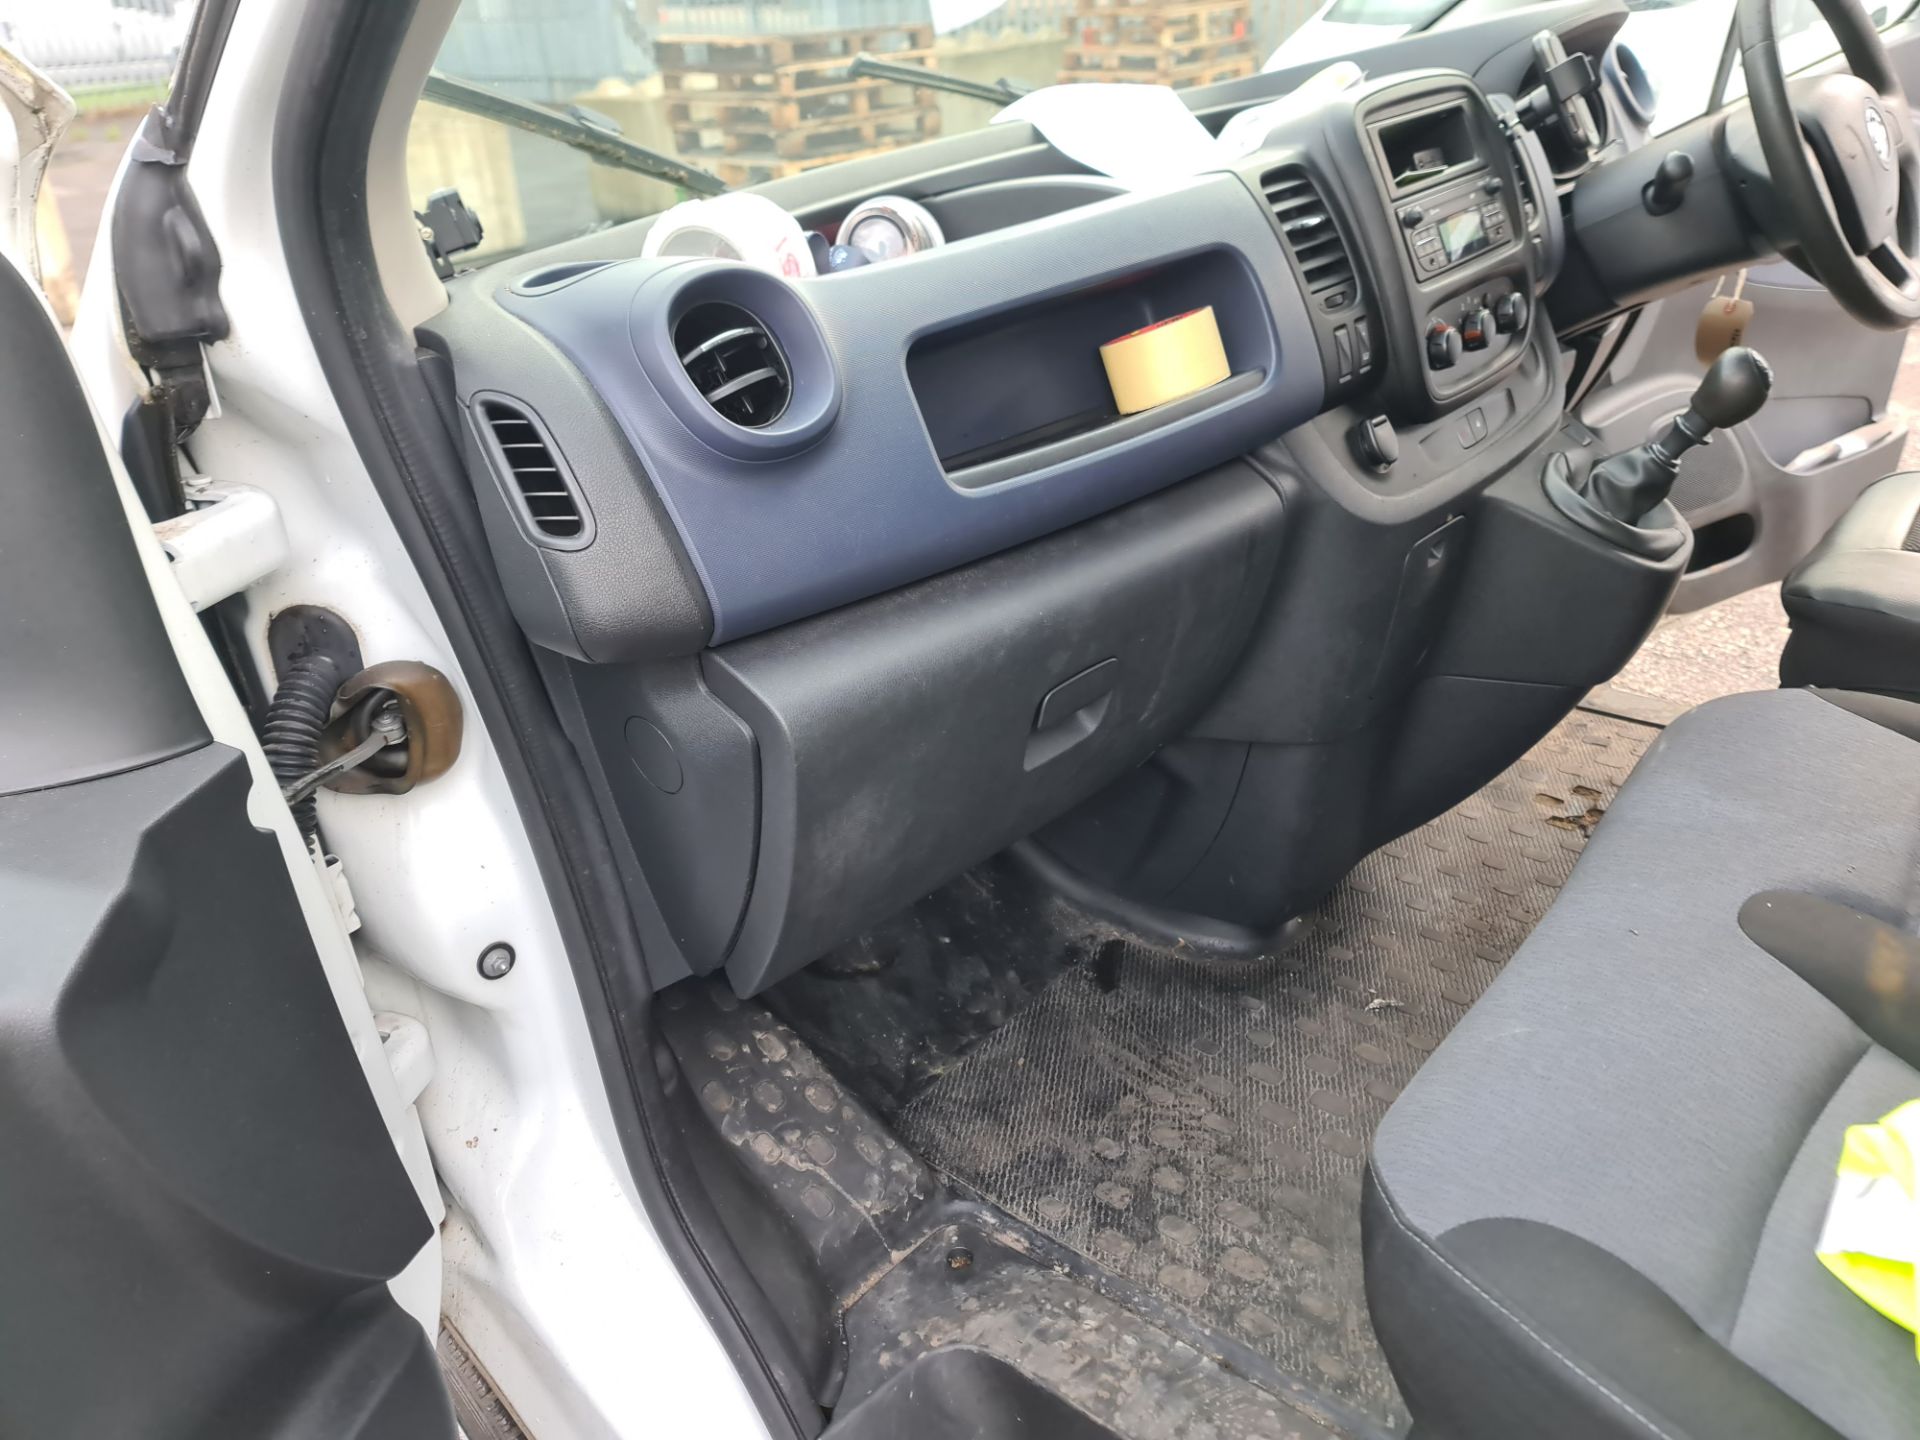 2015 Vauxhall Vivaro 2900 CDTi panel van - Image 54 of 81